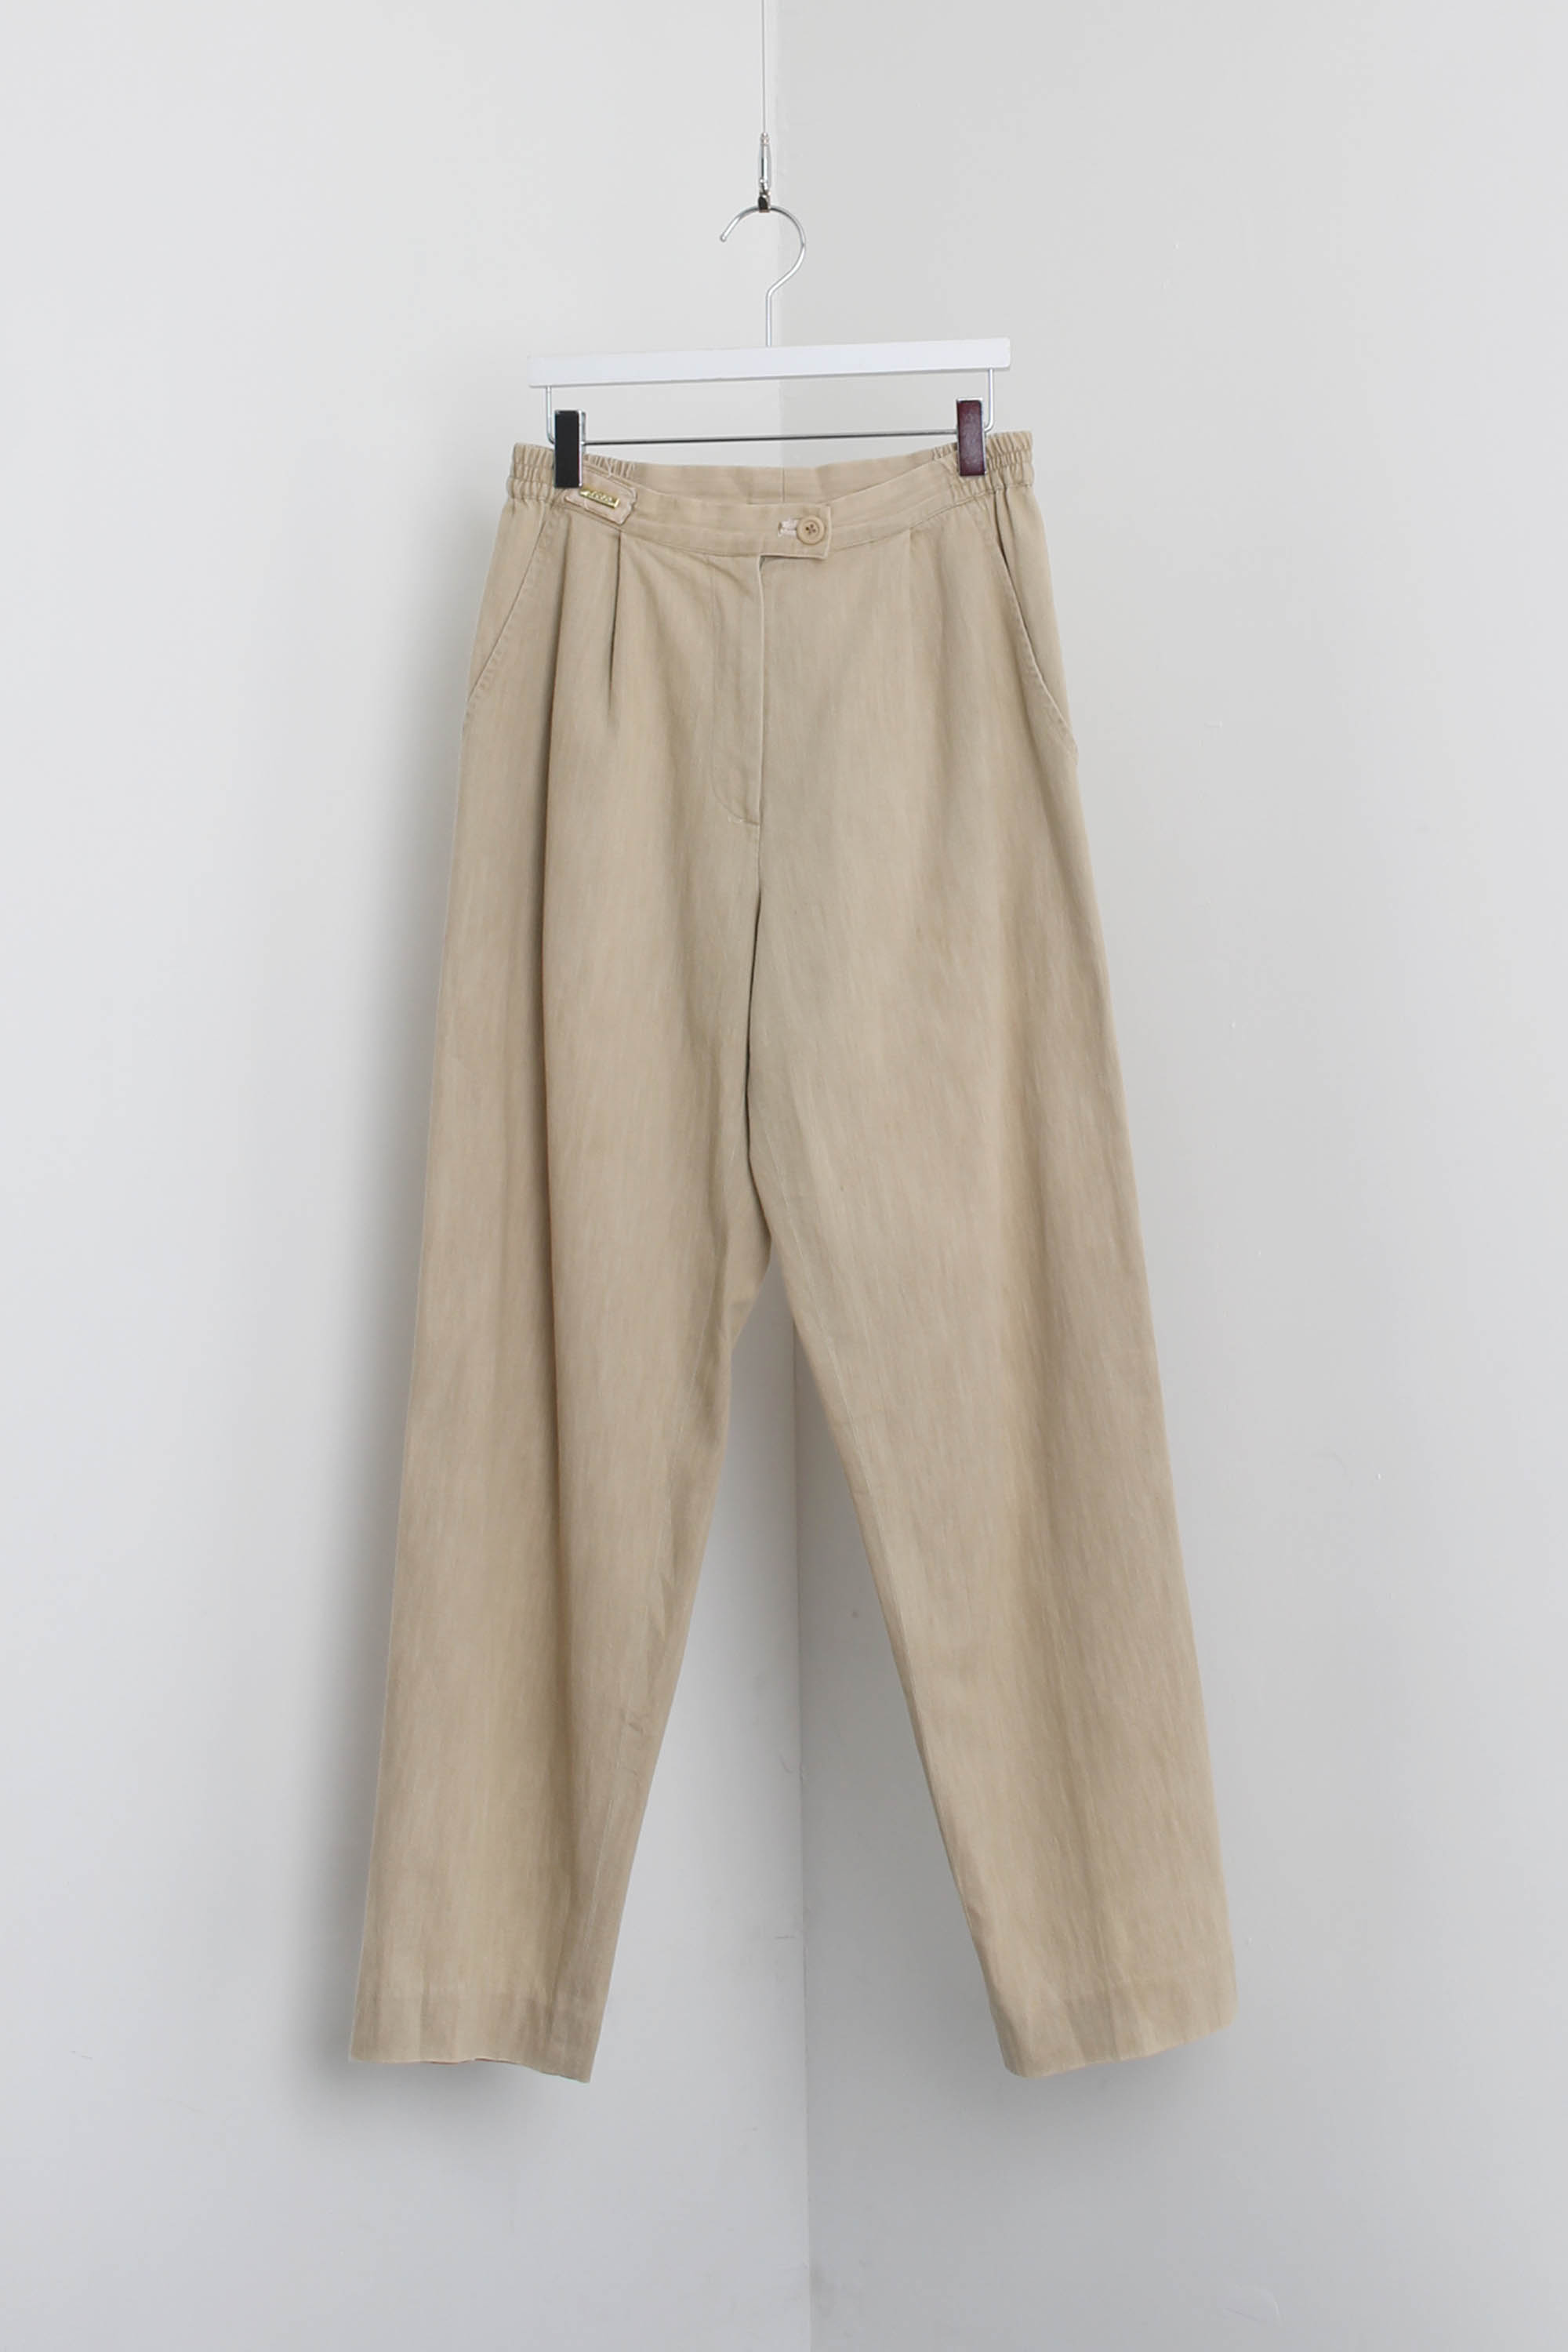 HERNO cotton pants